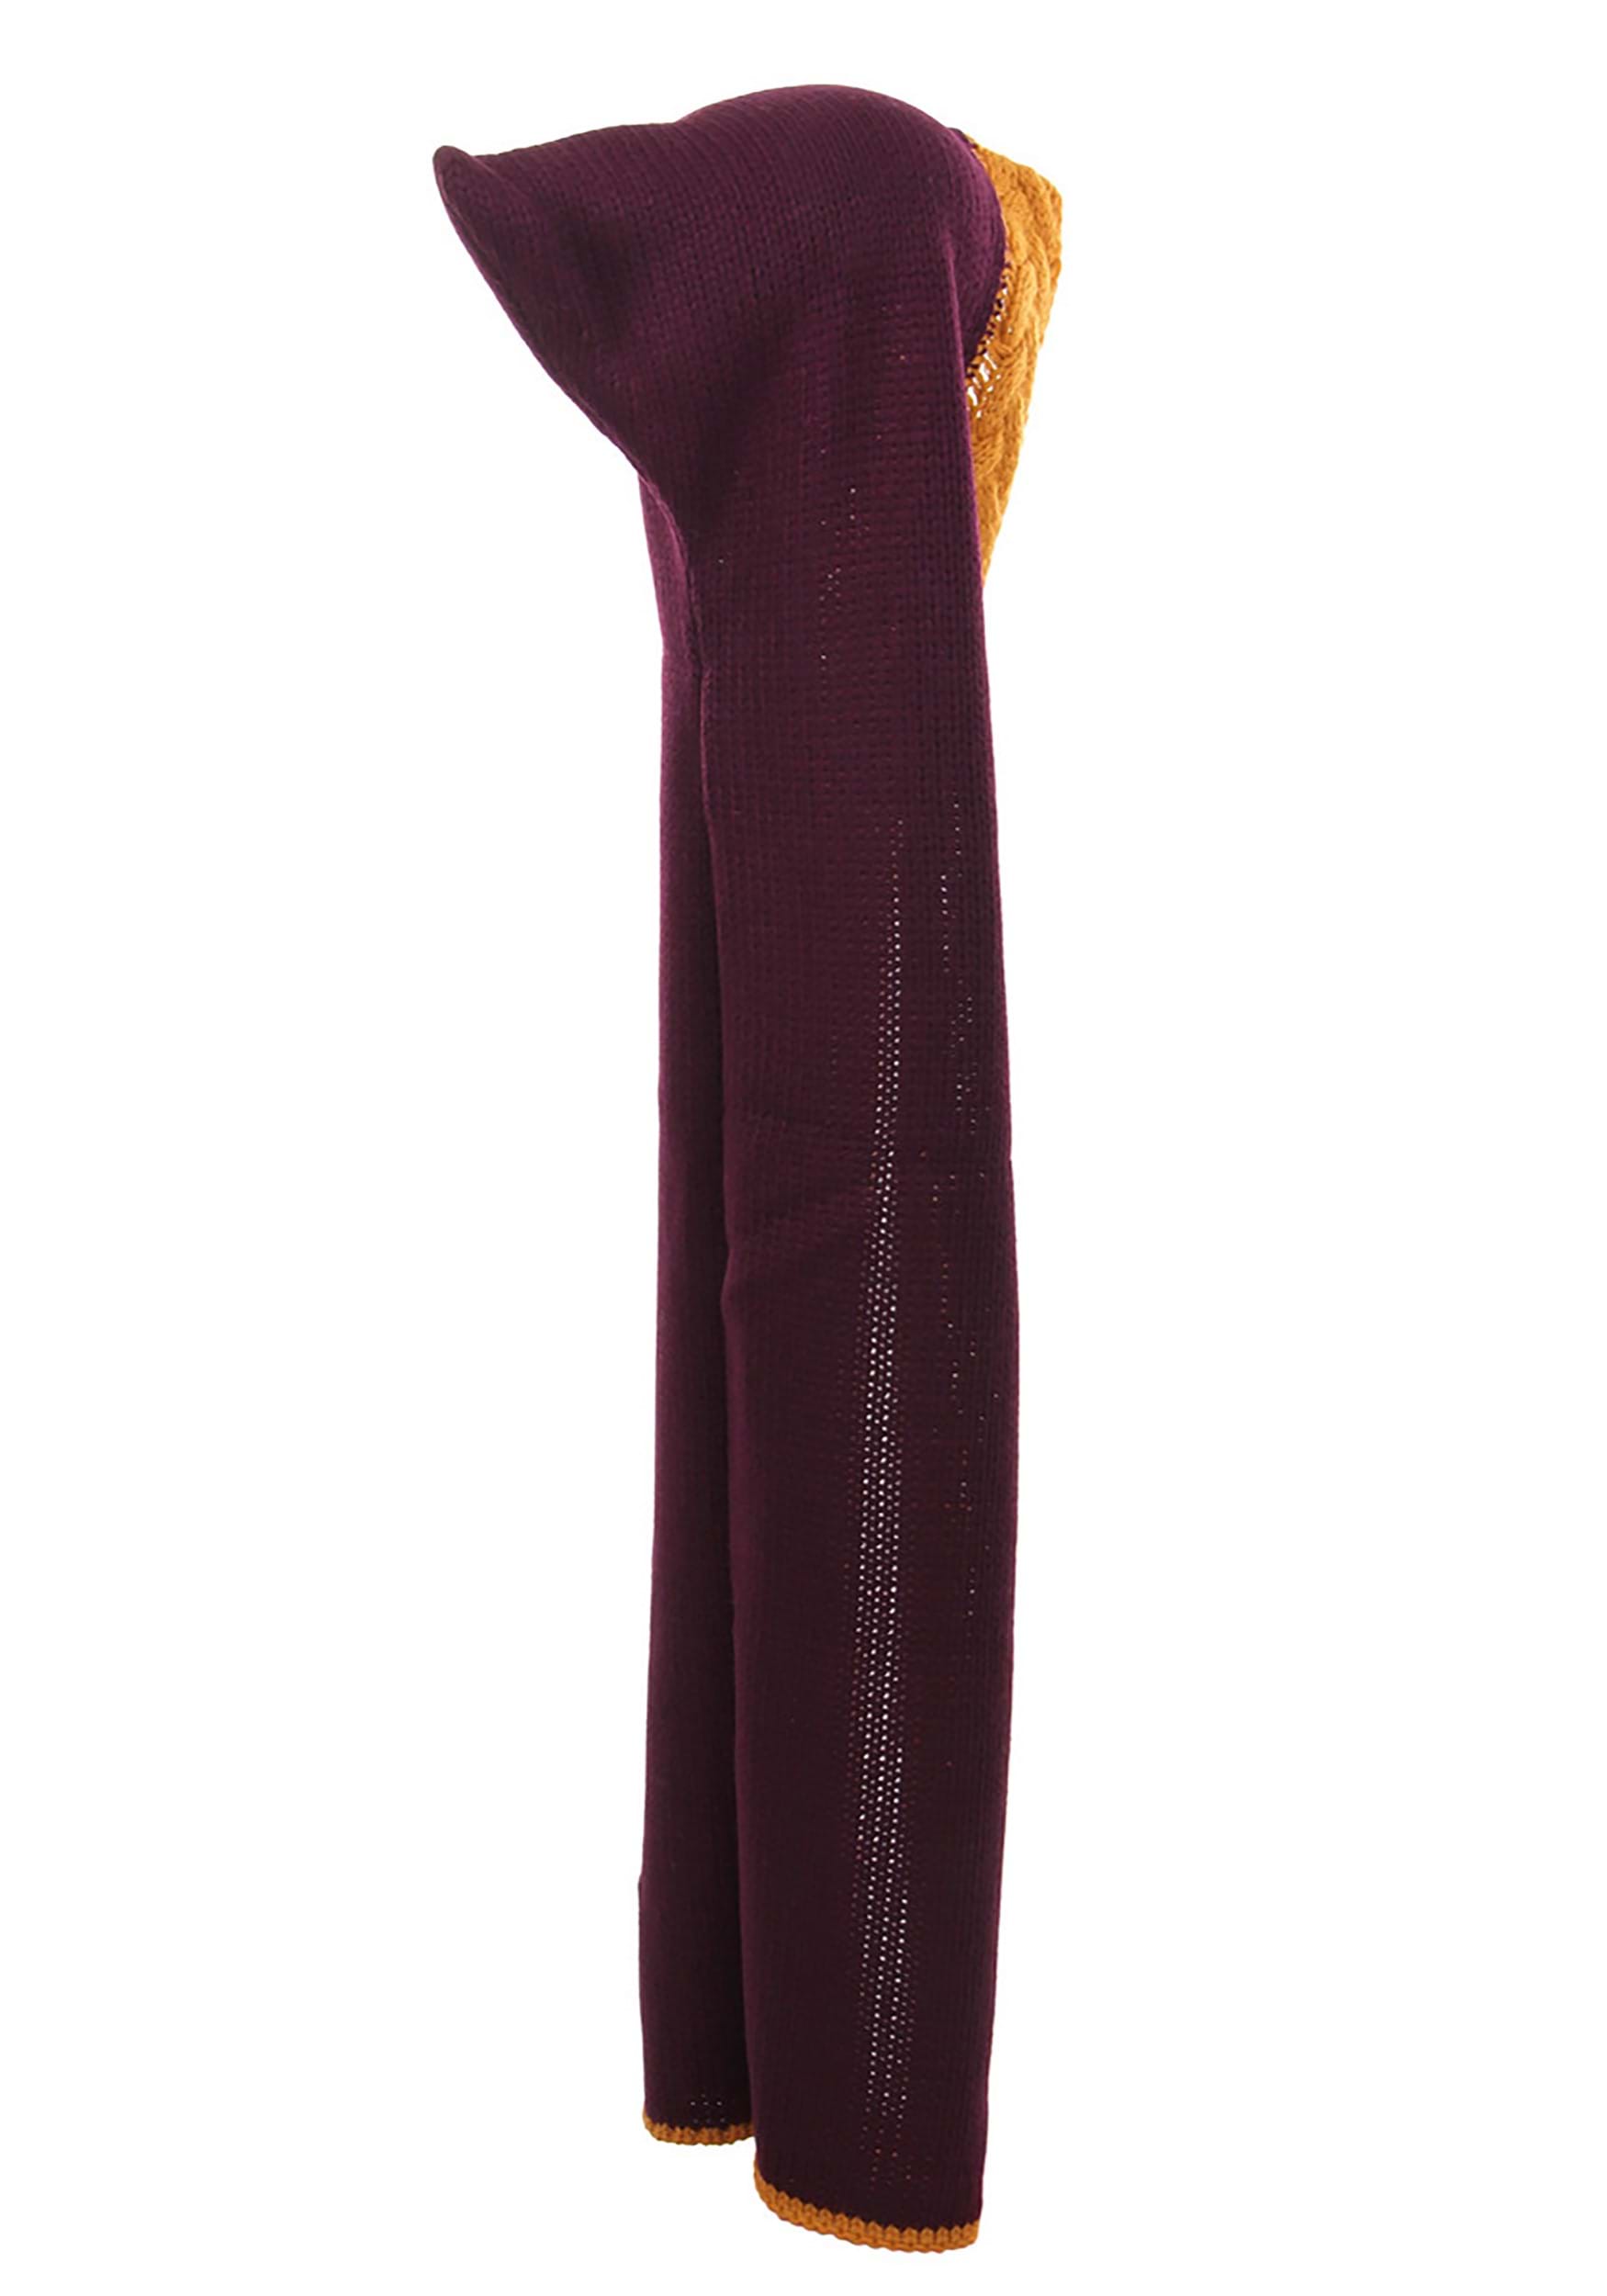 Gryffindor Knit Maroon Costume Hood